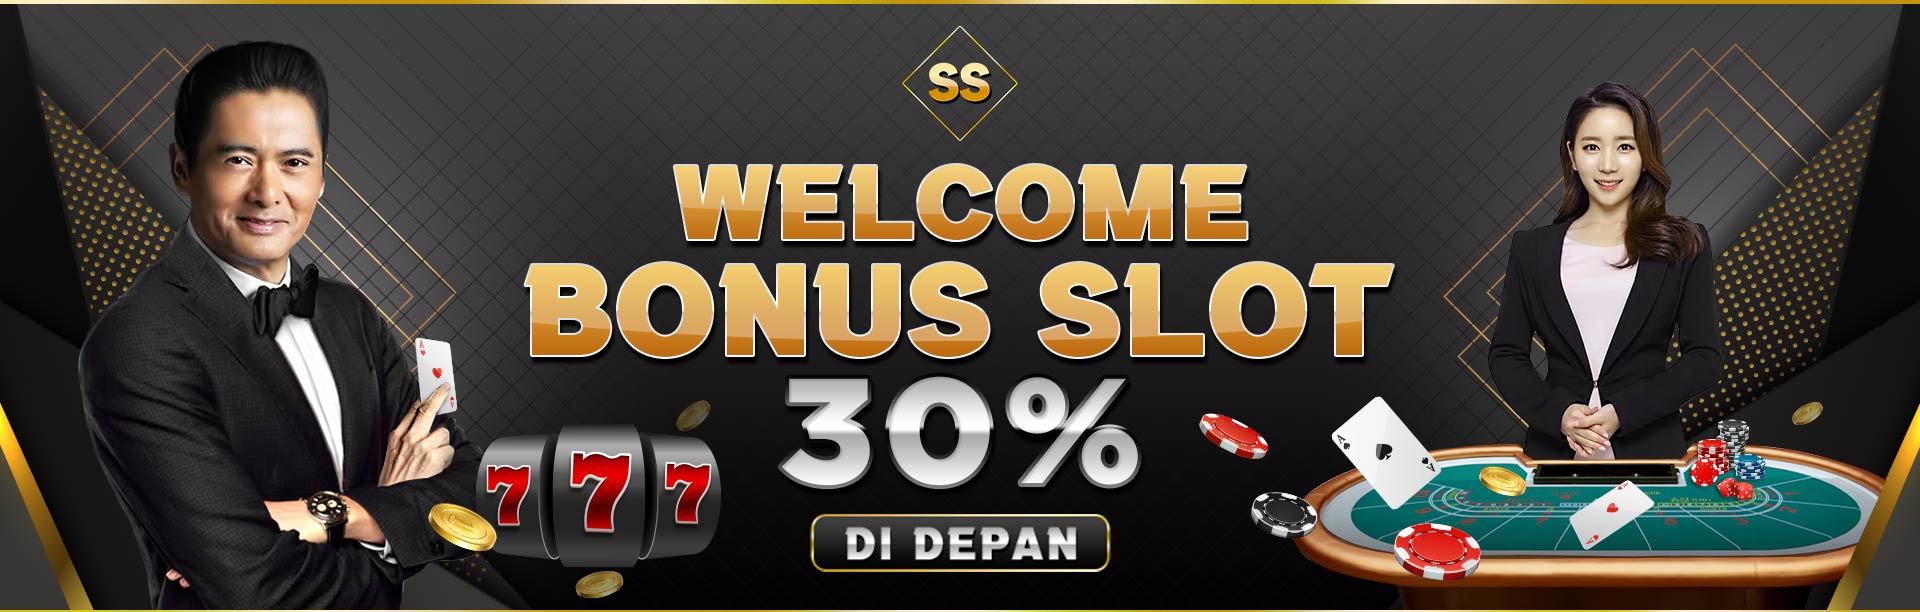 Welcome Bonus 30%